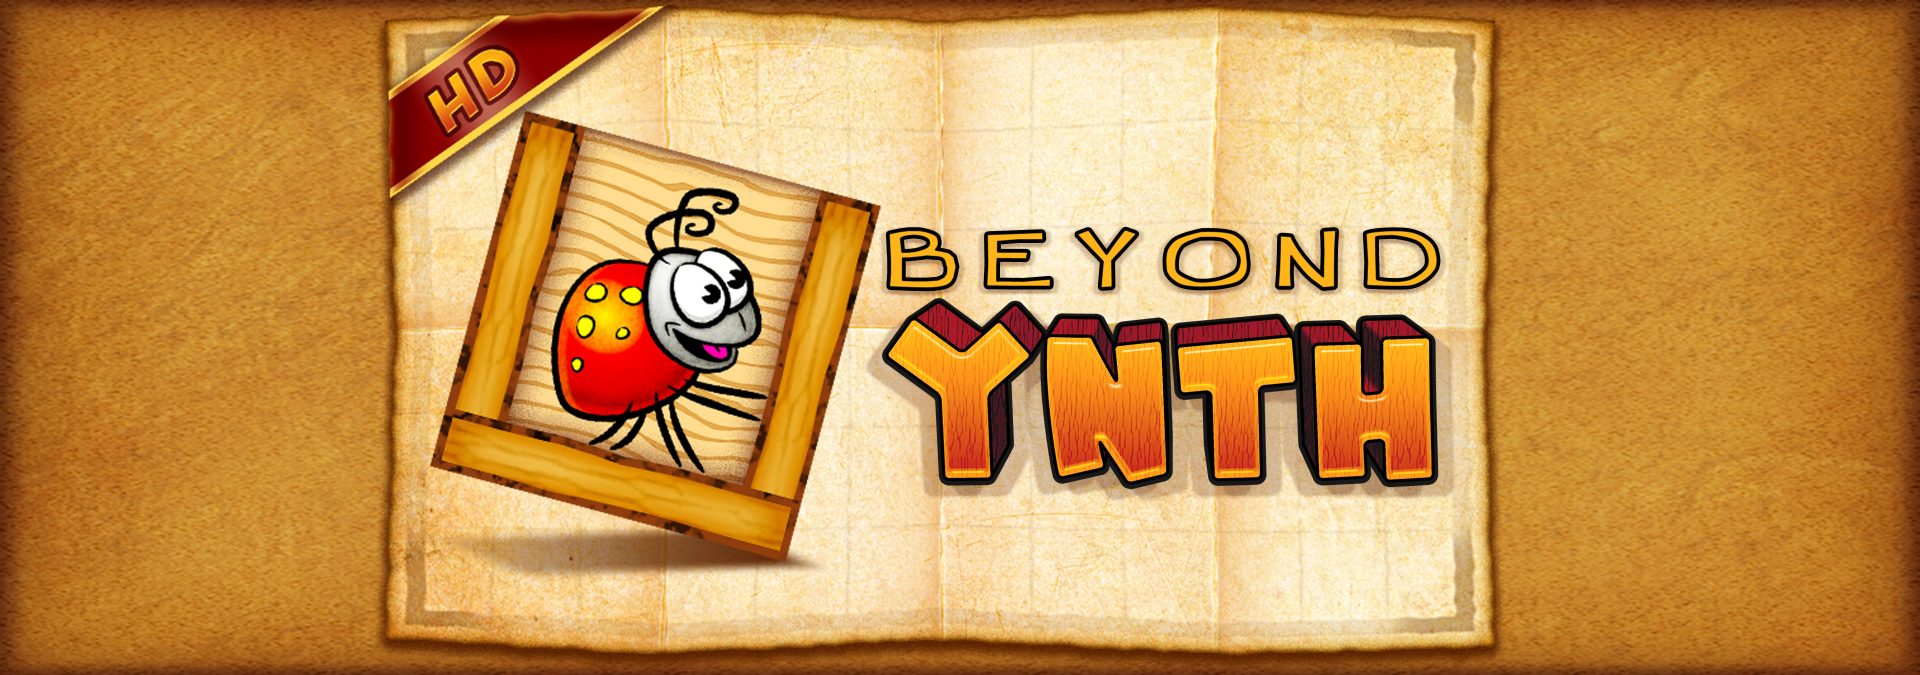 Beyond Ynth